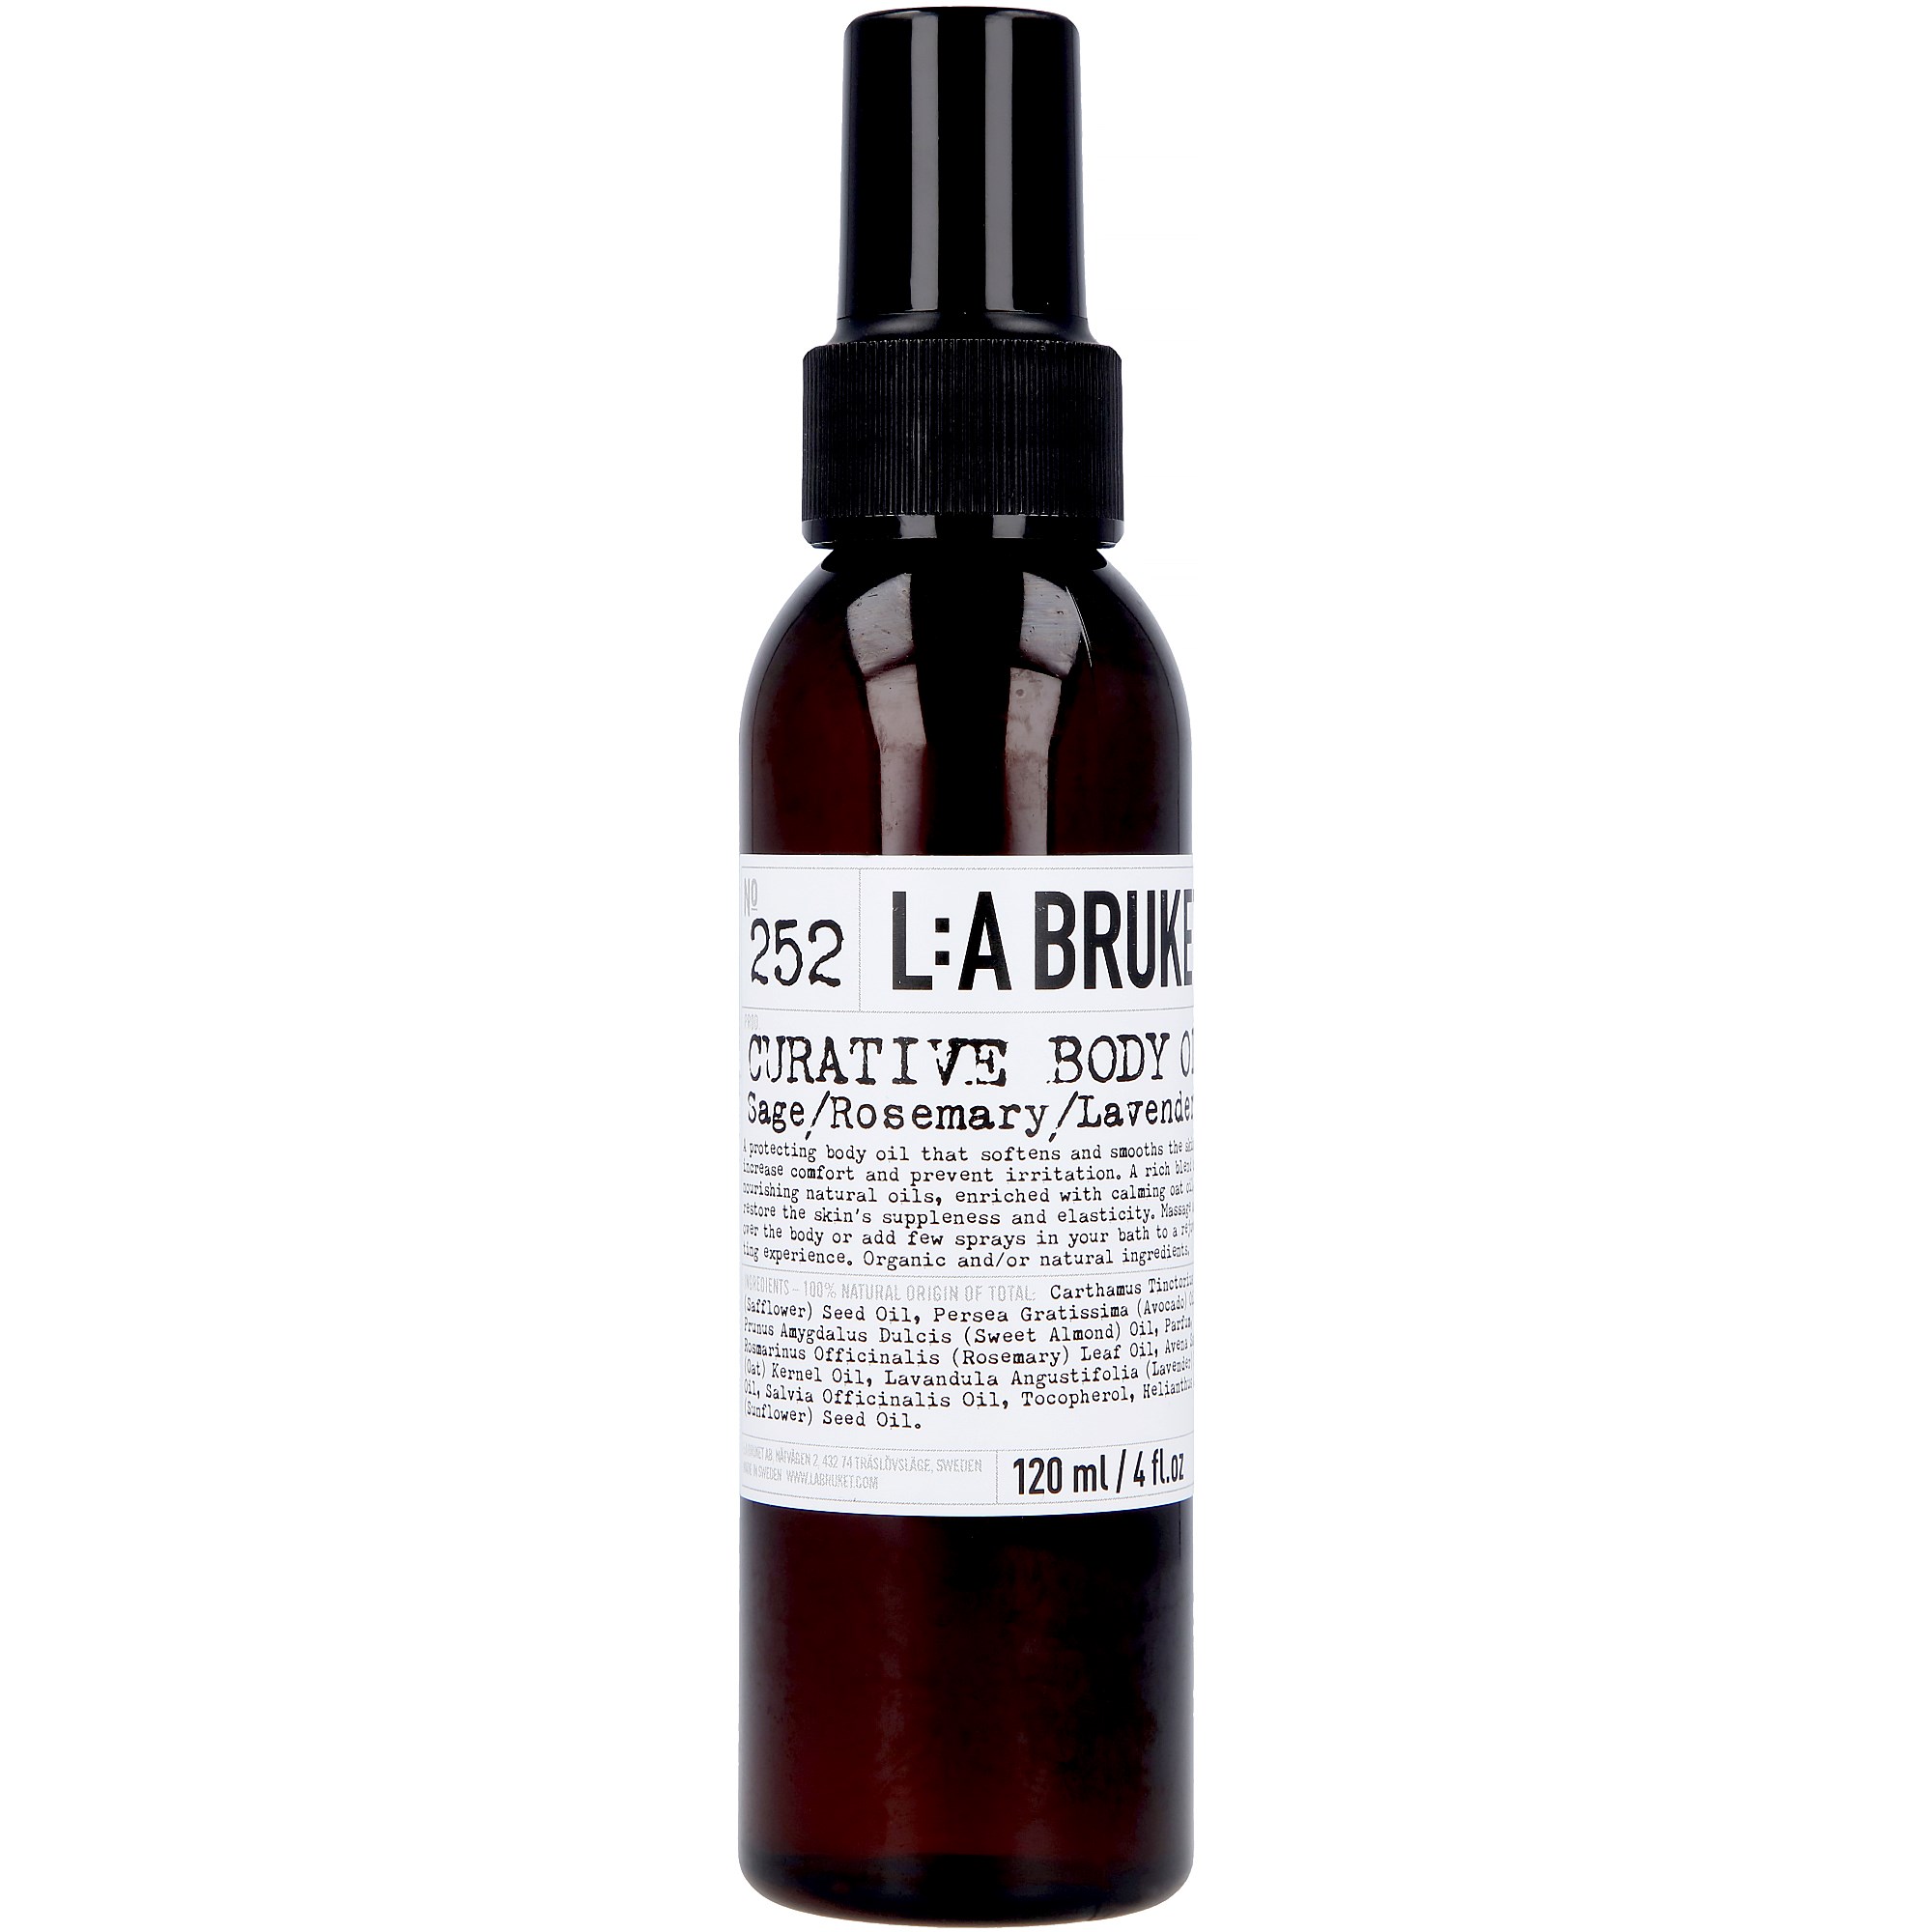 L:A Bruket Curative Body Oil Sage/Rosemary/Lavender 120 ml